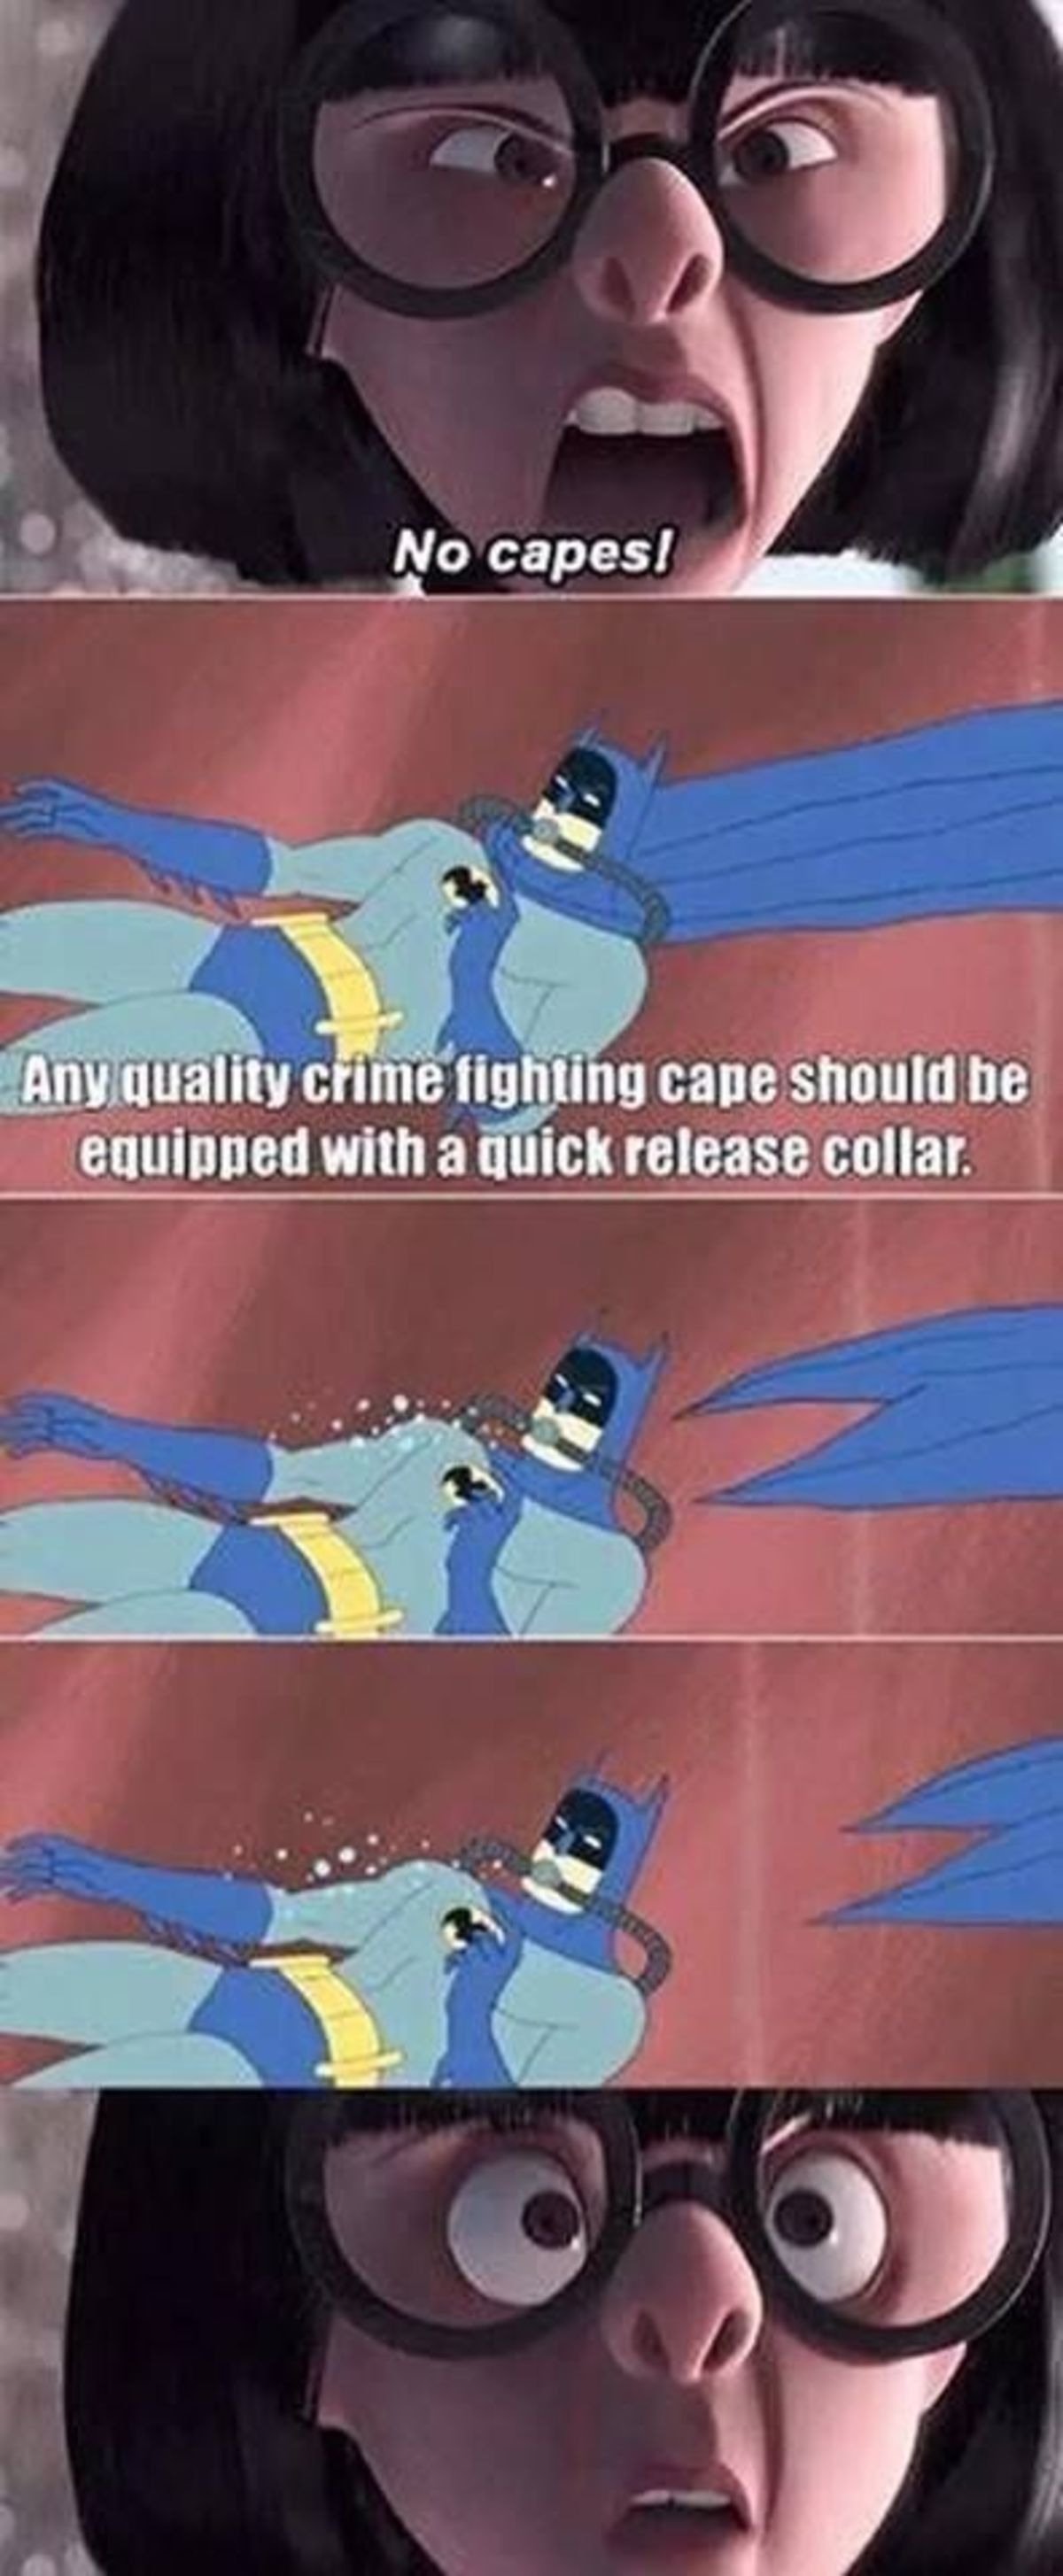 Because he's Batman